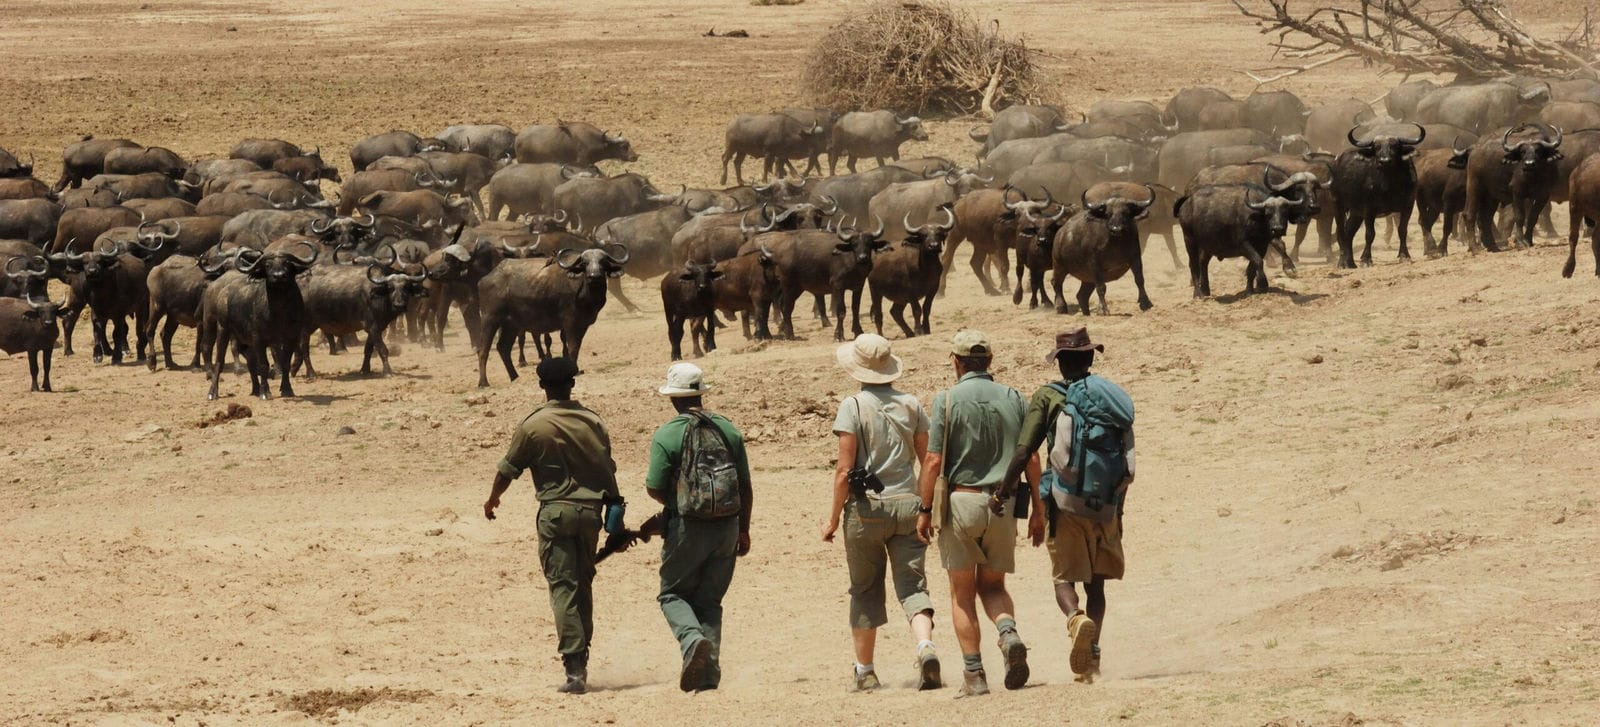 Chikoko Trails walking_buffalo herd